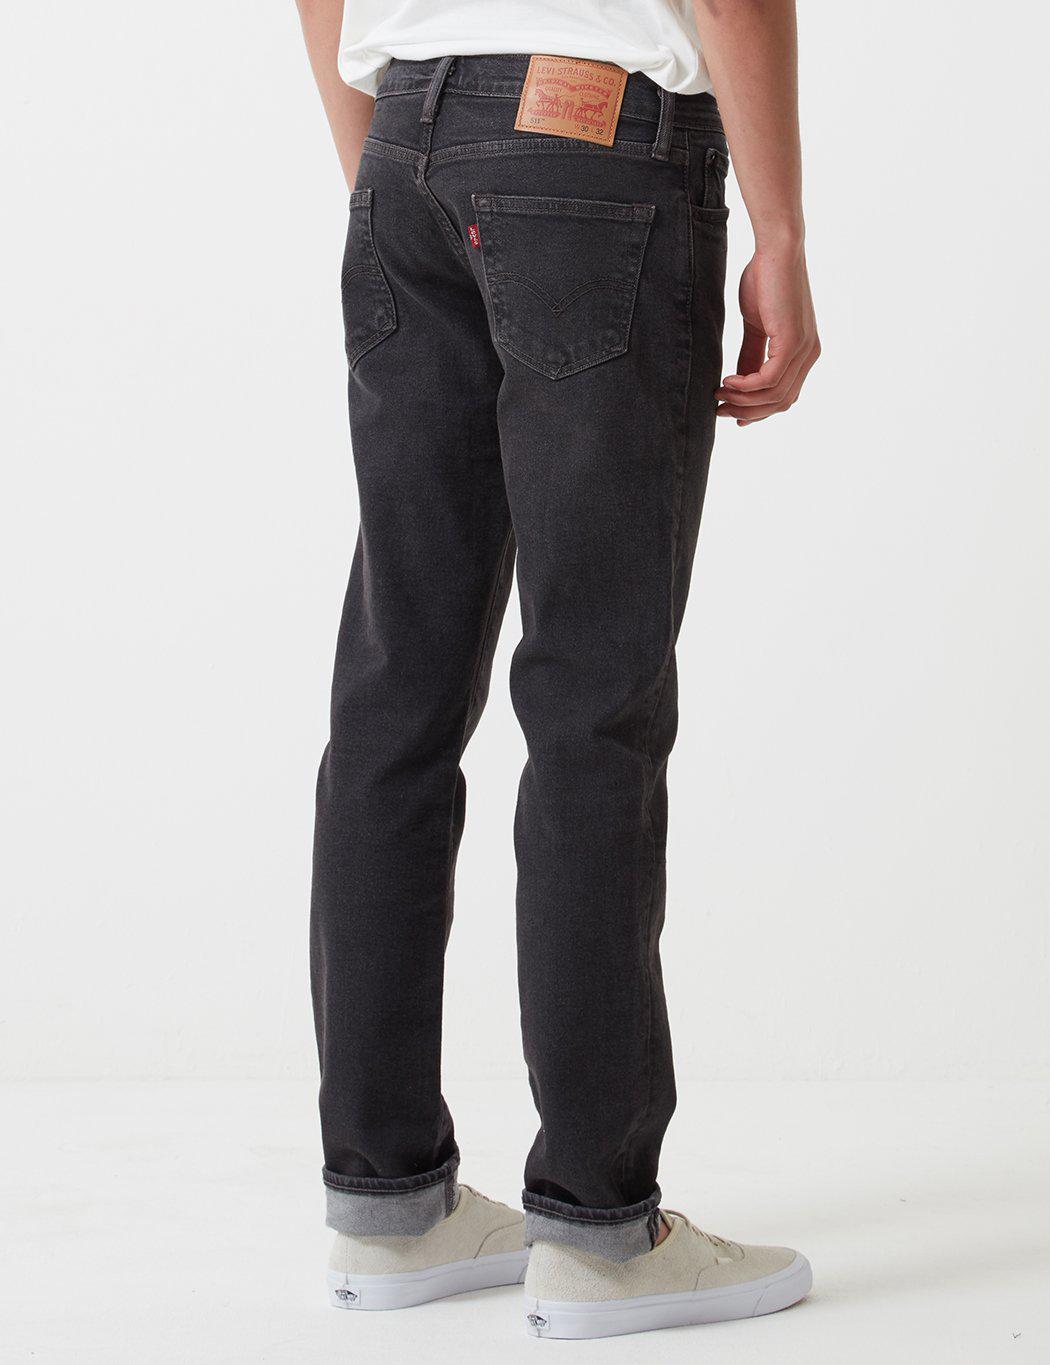 Levi's Denim 511 Performance Fit Jeans (slim) in Indigo (Blue) for Men ...